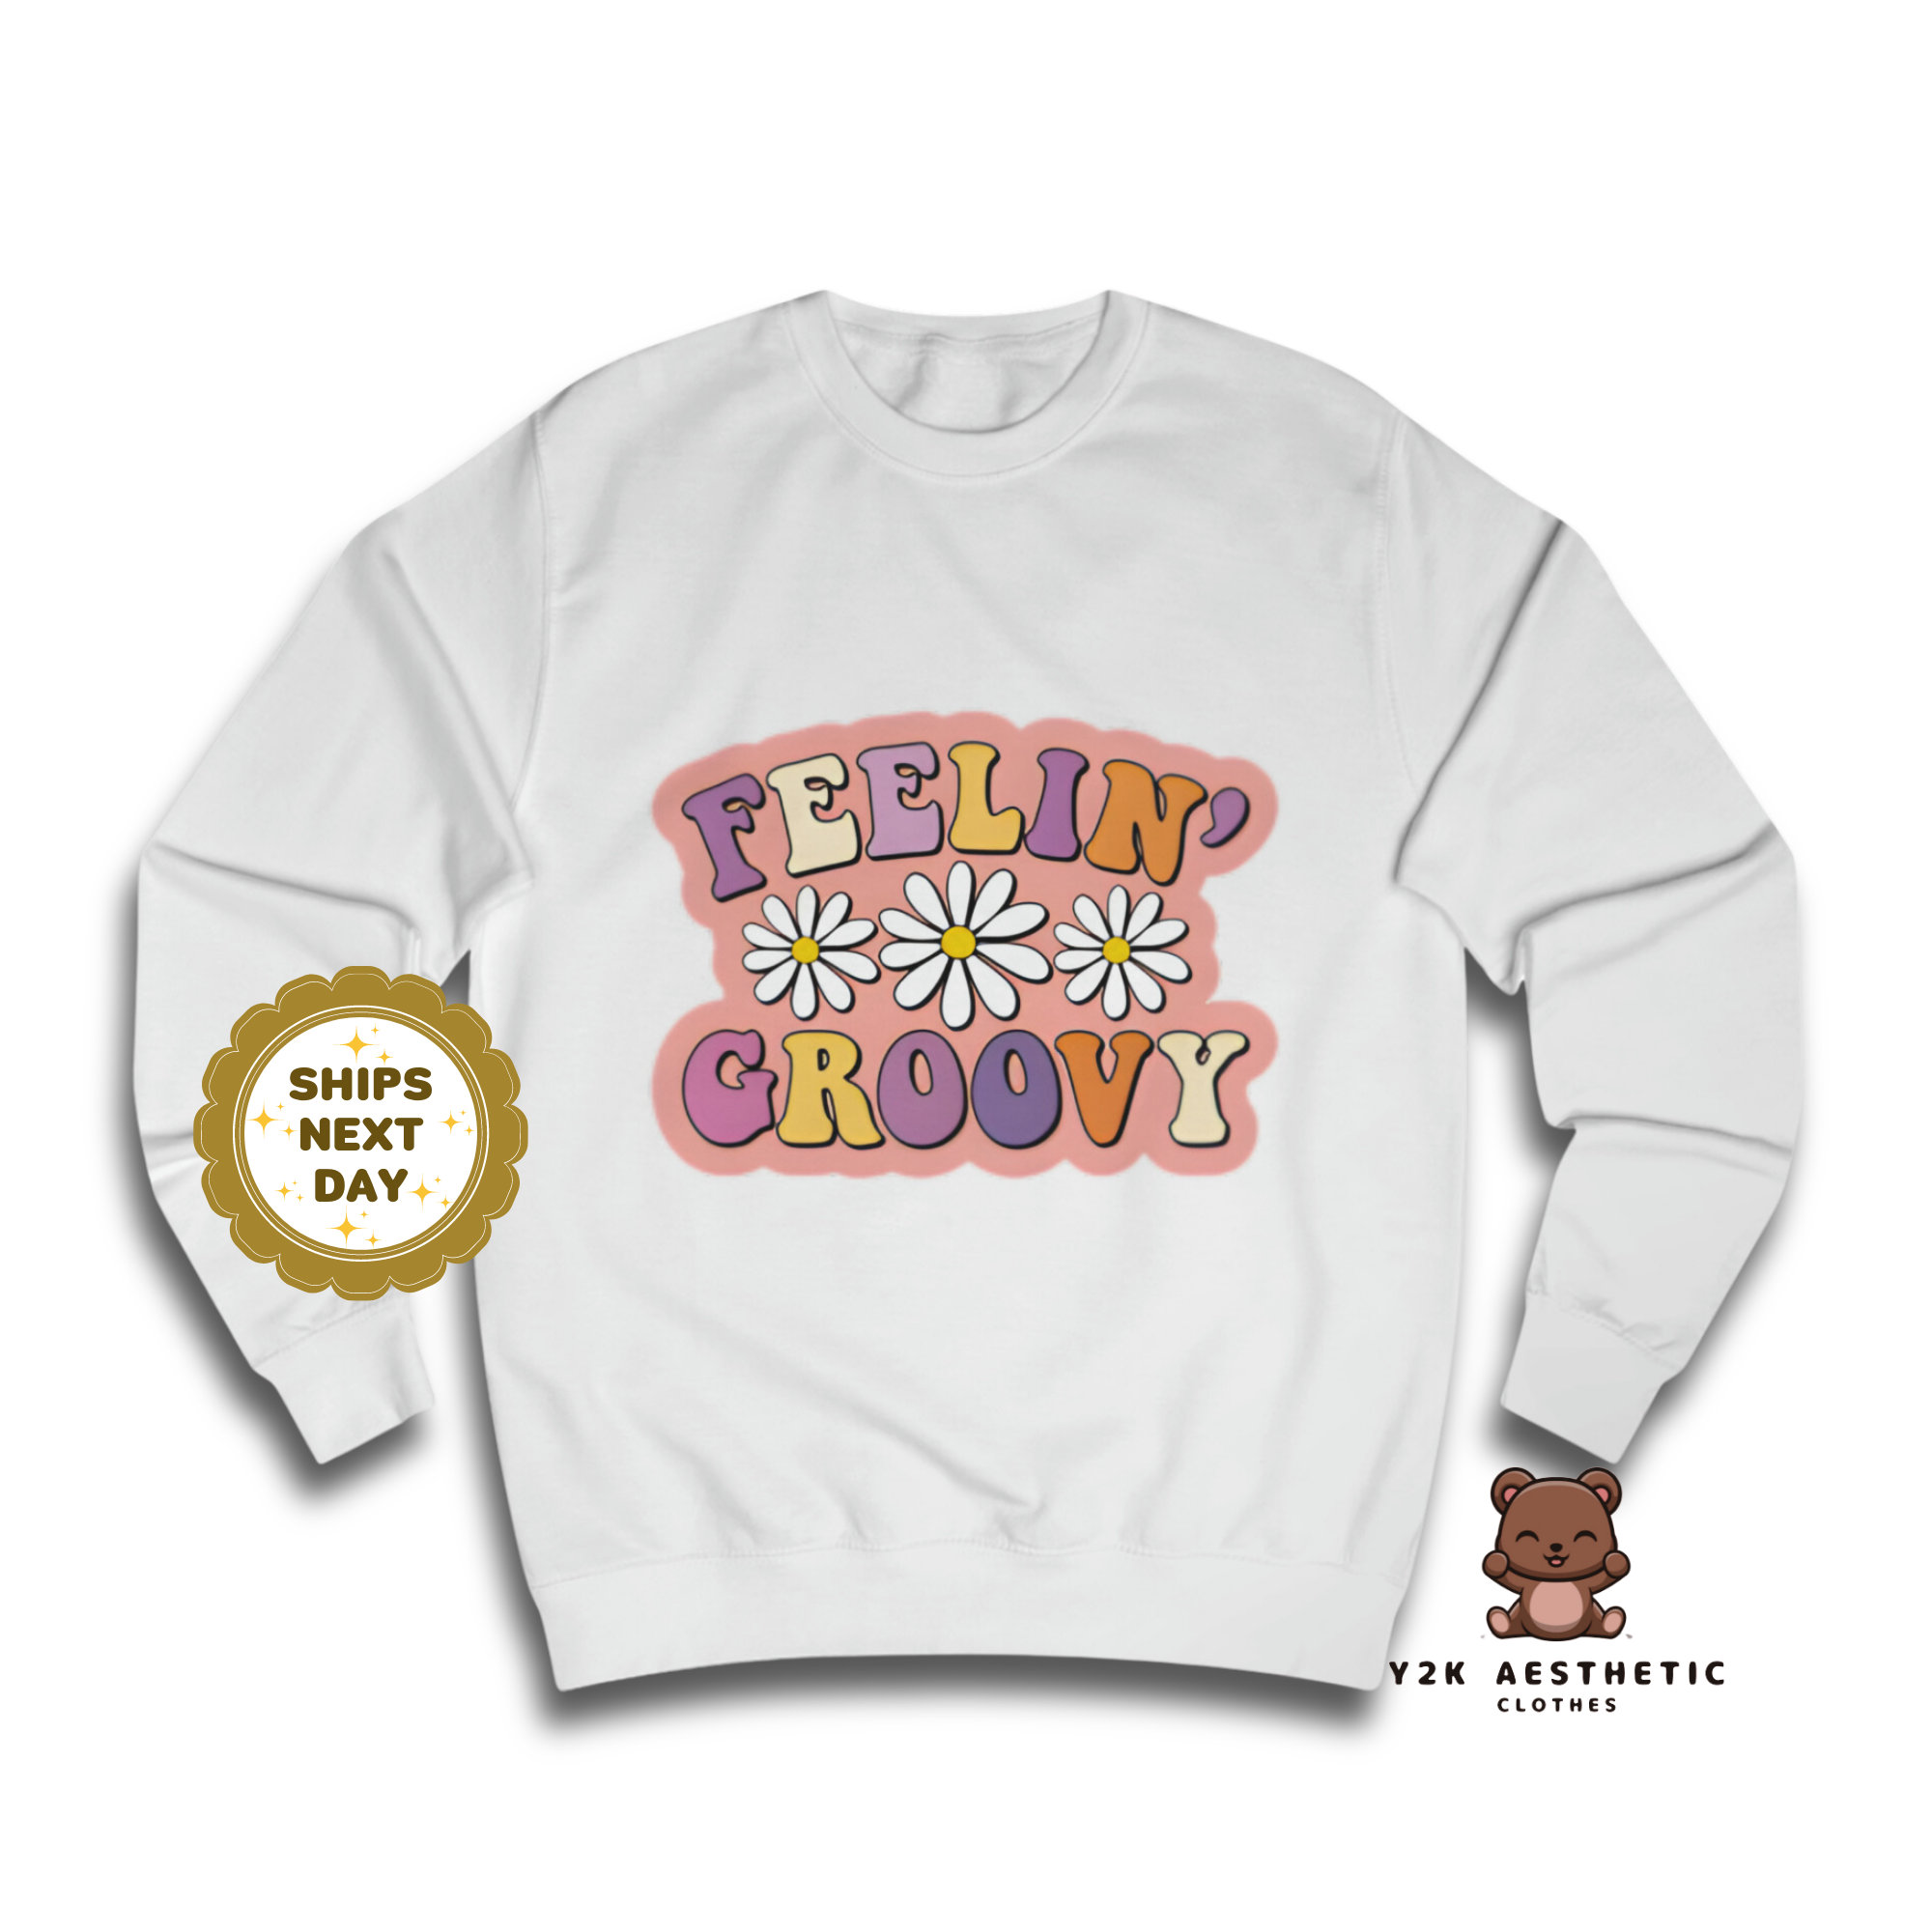 Retro-inspired Feeling Groovy Graphic Crewneck Sweatshirt